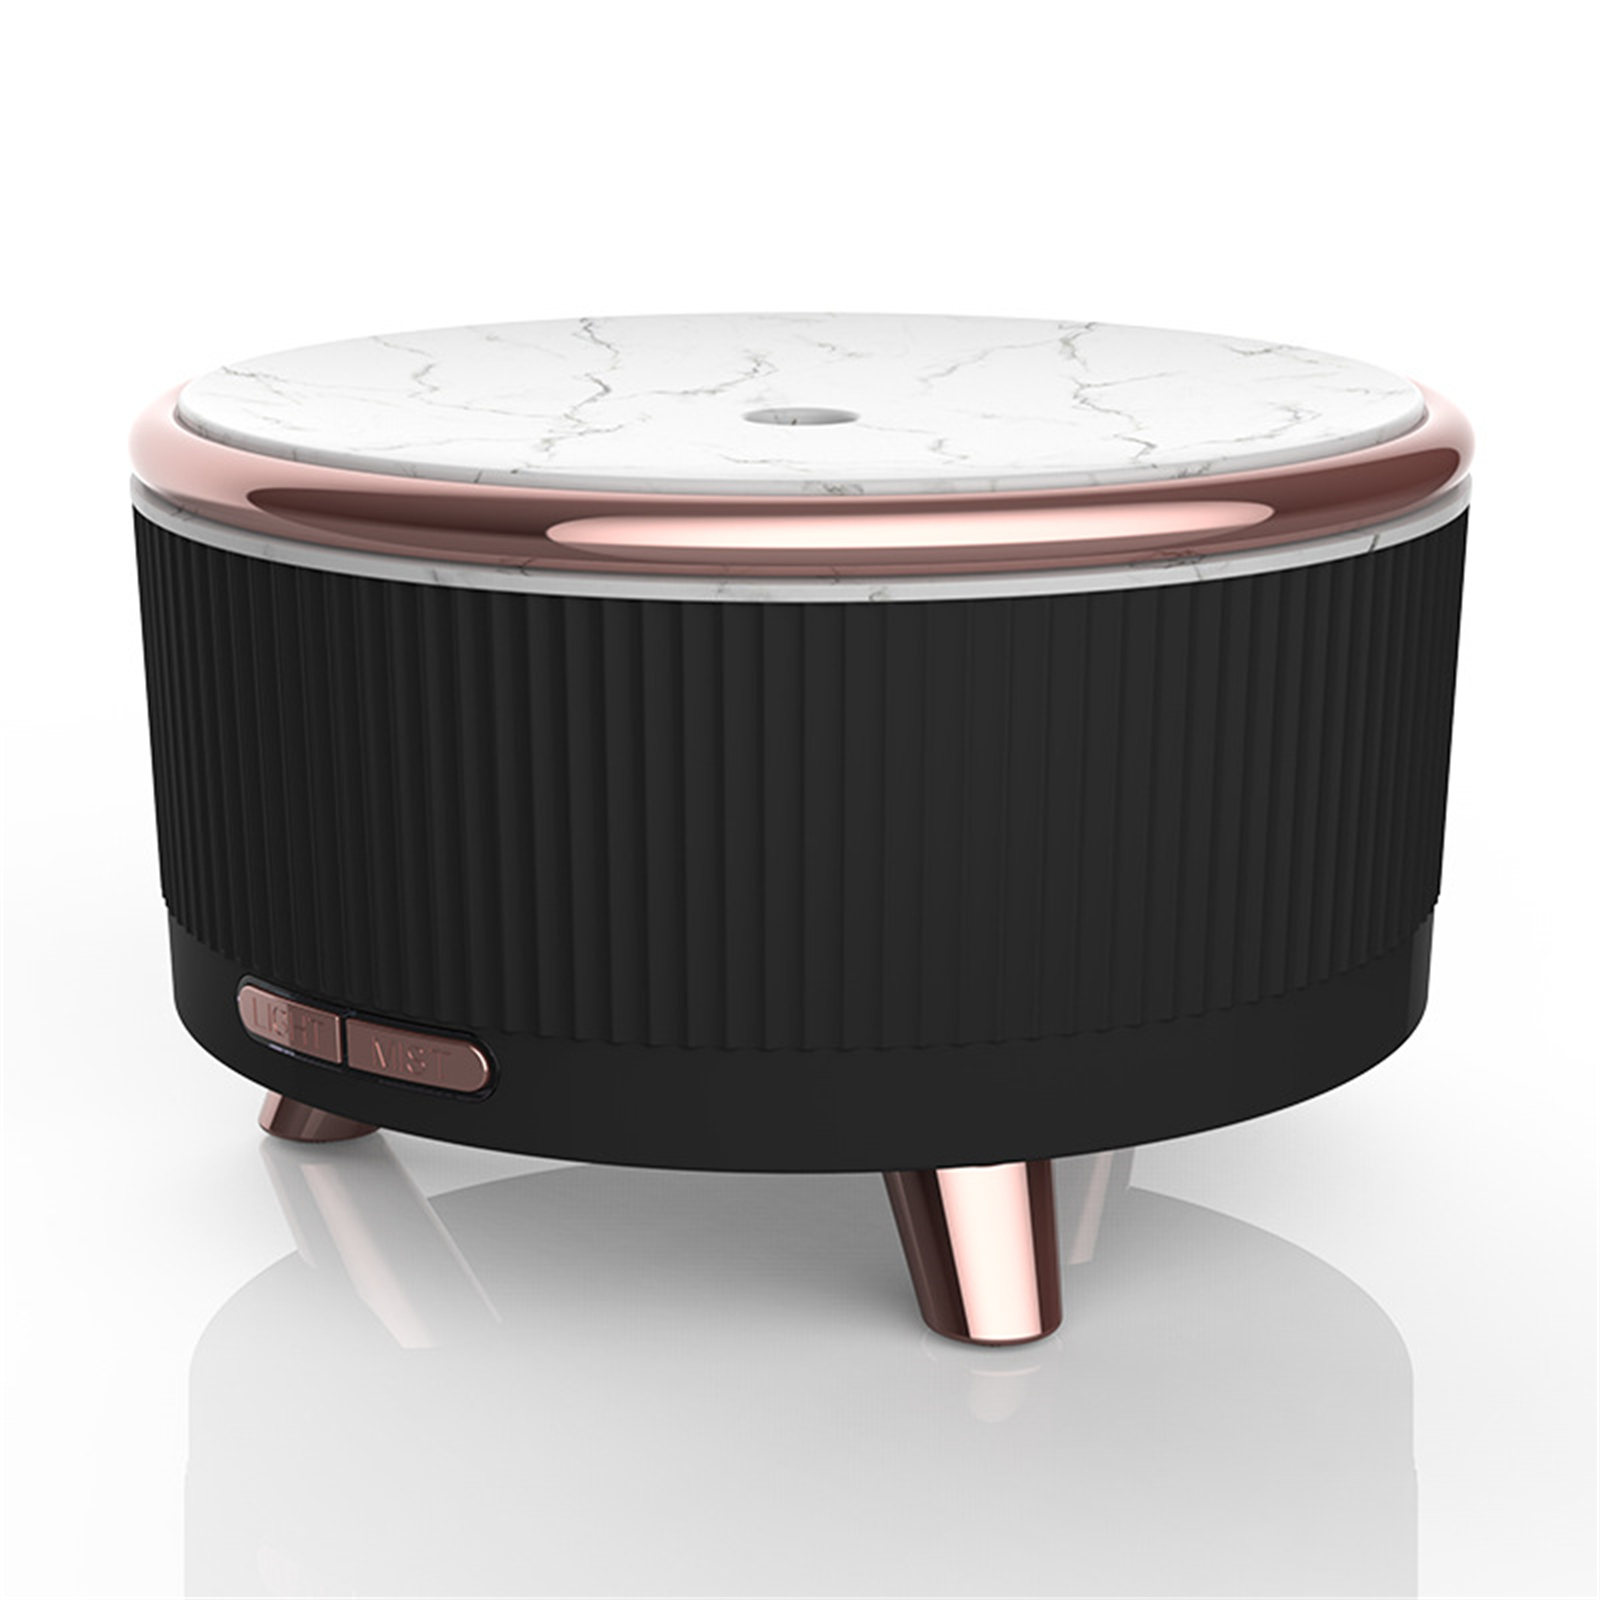 500ml Ultrasonic Household Mini Humidifier Aroma Essential Oil Diffuser